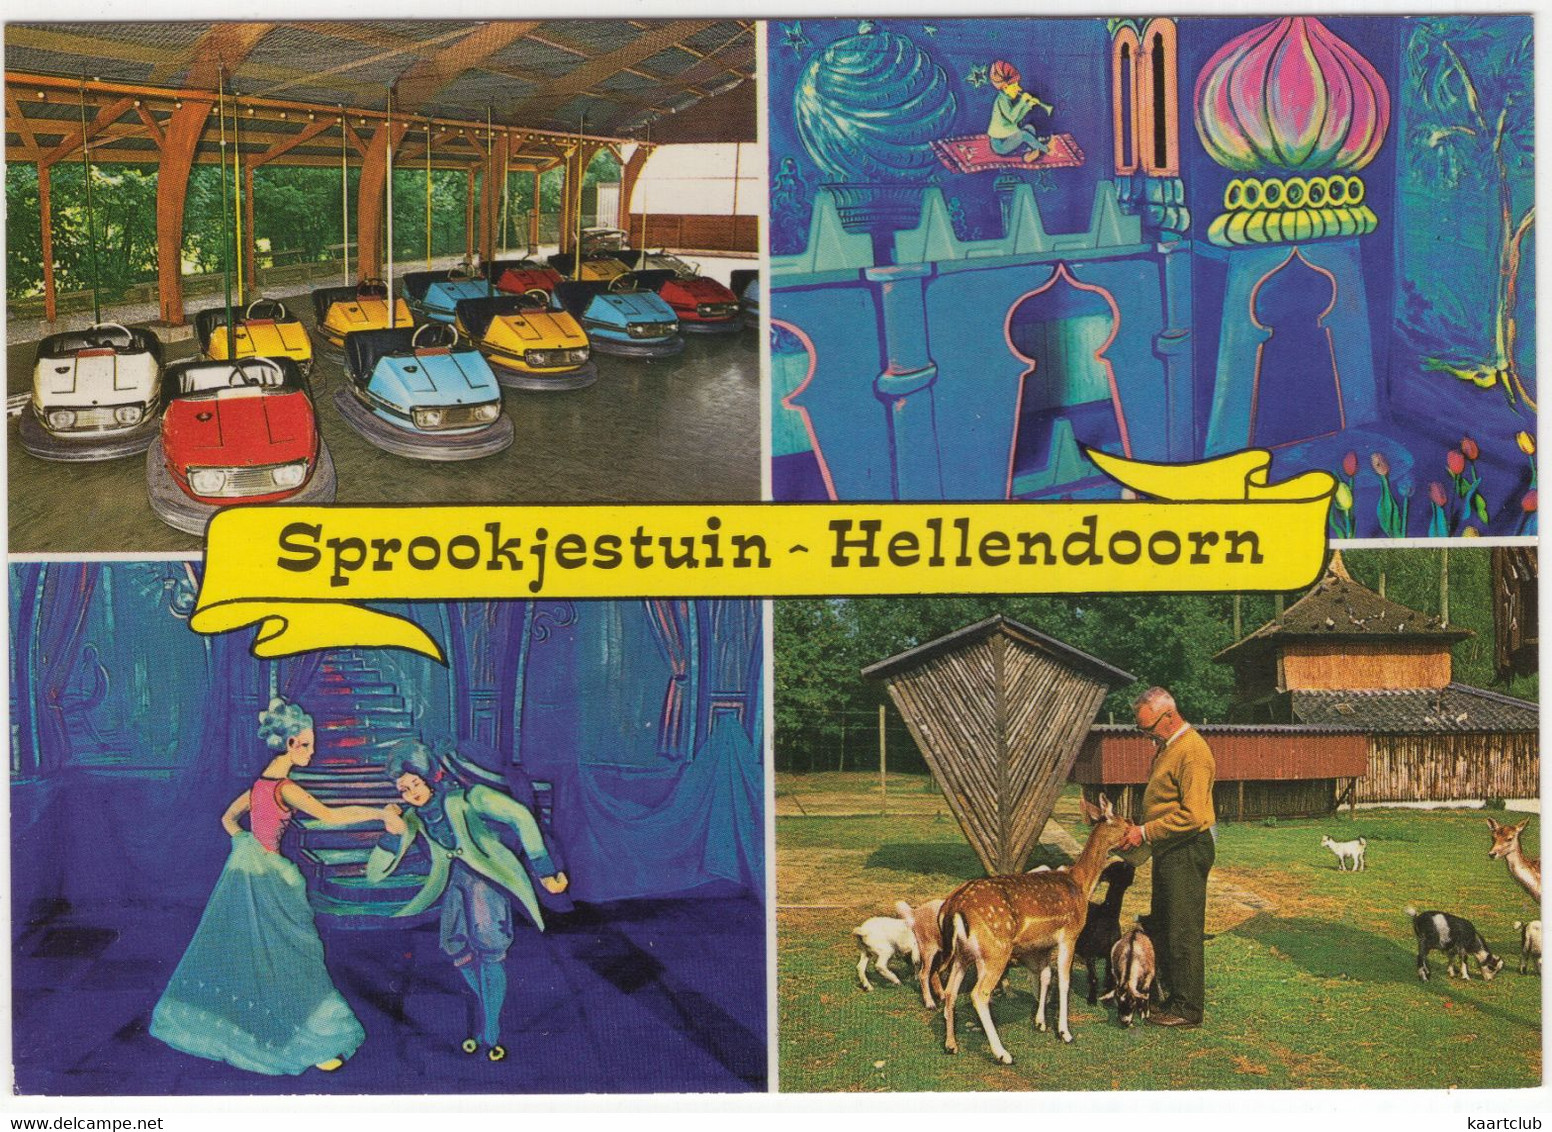 Sprookjestuin Hellendoorn - 'De Elf Provinciën' - Botsauto's/Bumpercars,Vliegend Tapijt/Magic Carpet - (Ov.) - Nr. L1323 - Hellendoorn